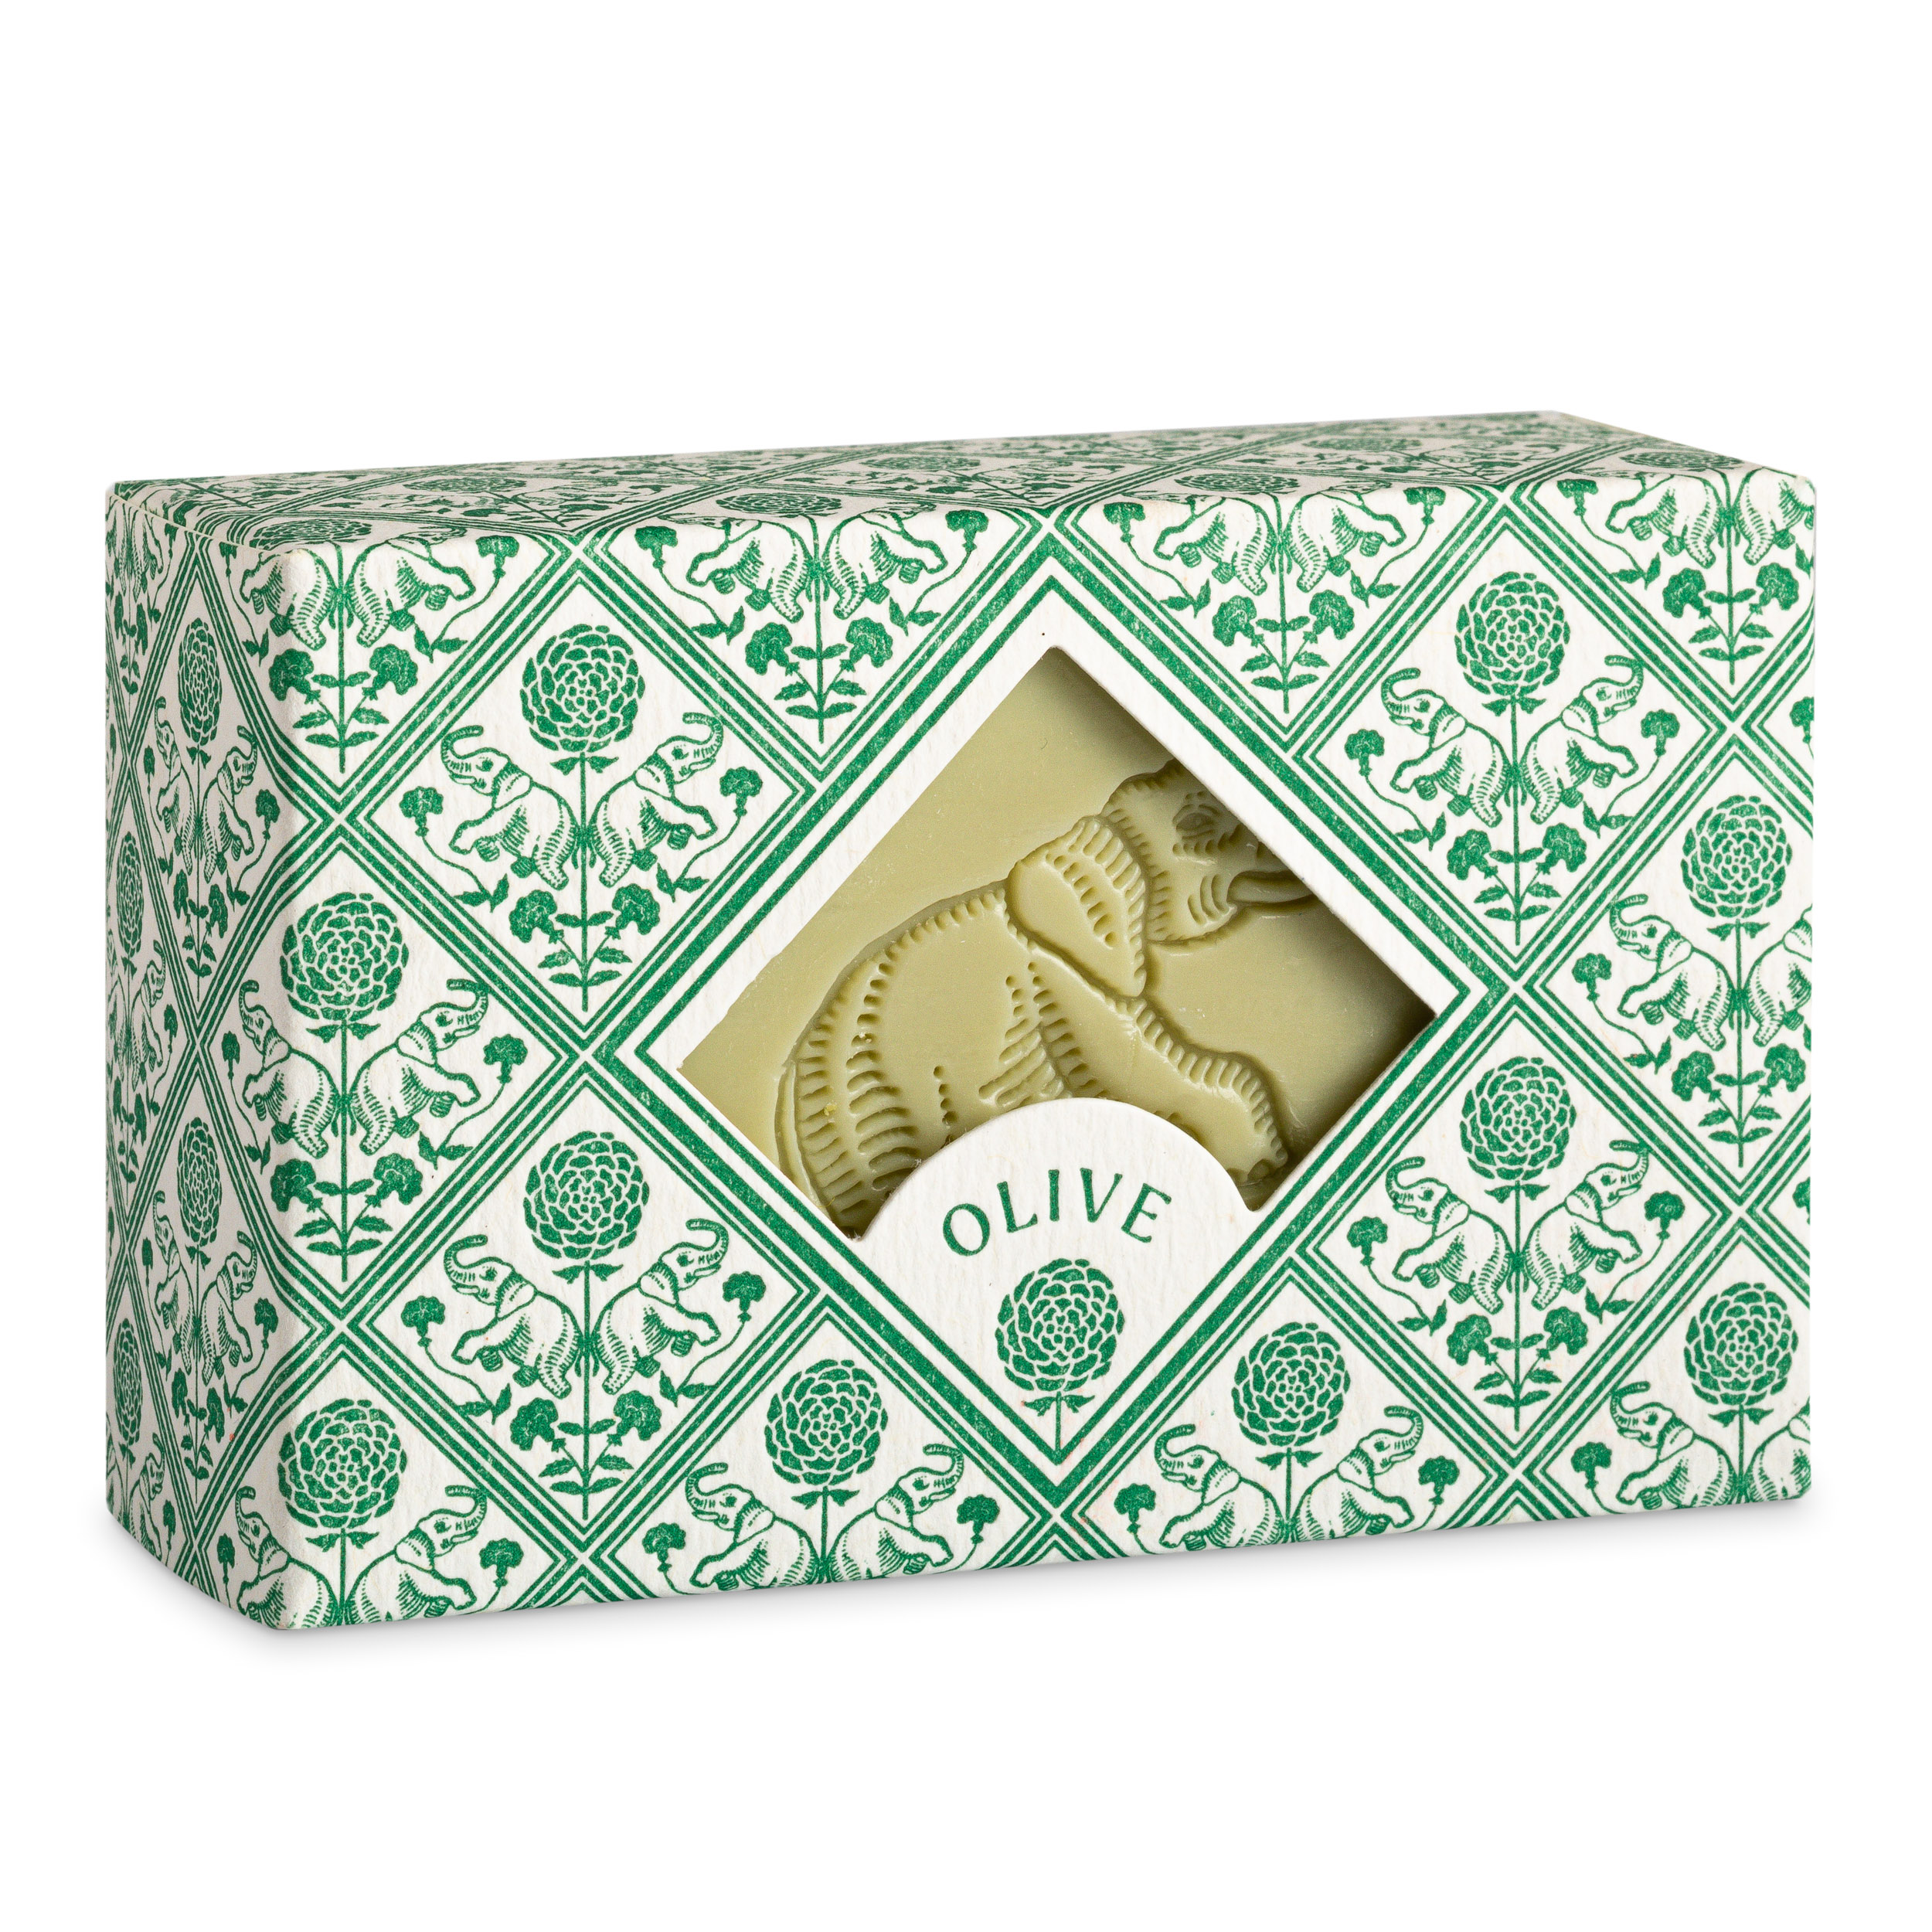 L'éléphant Olive Hand Soap - Soap - Archivist - from Archivist Gallery 